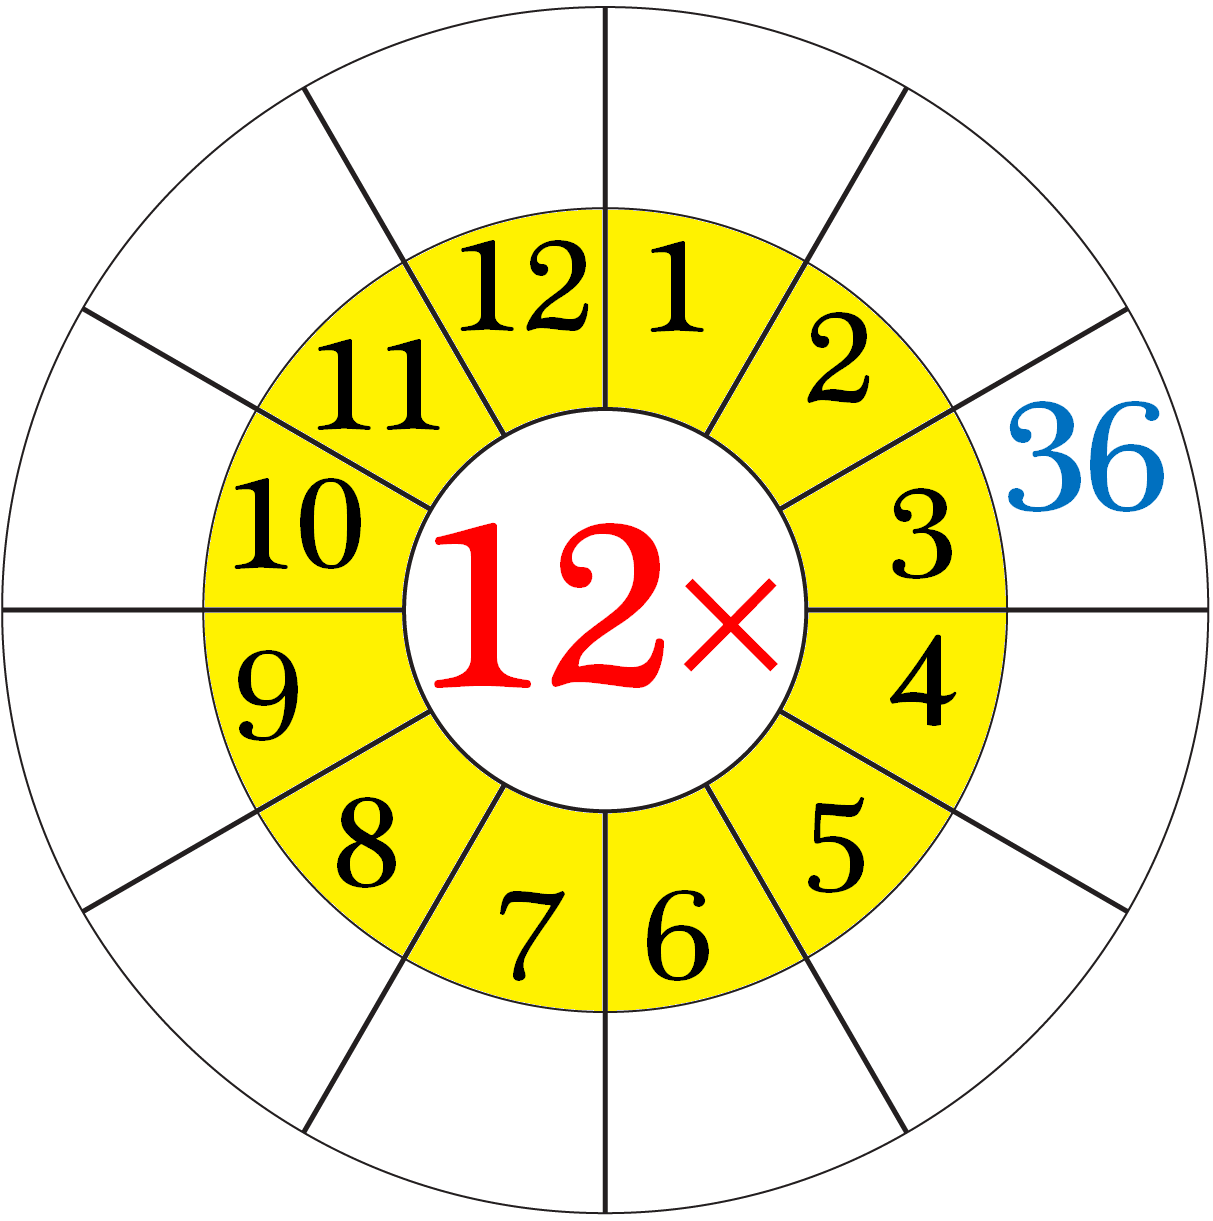 Worksheet on Multiplication Table of 12